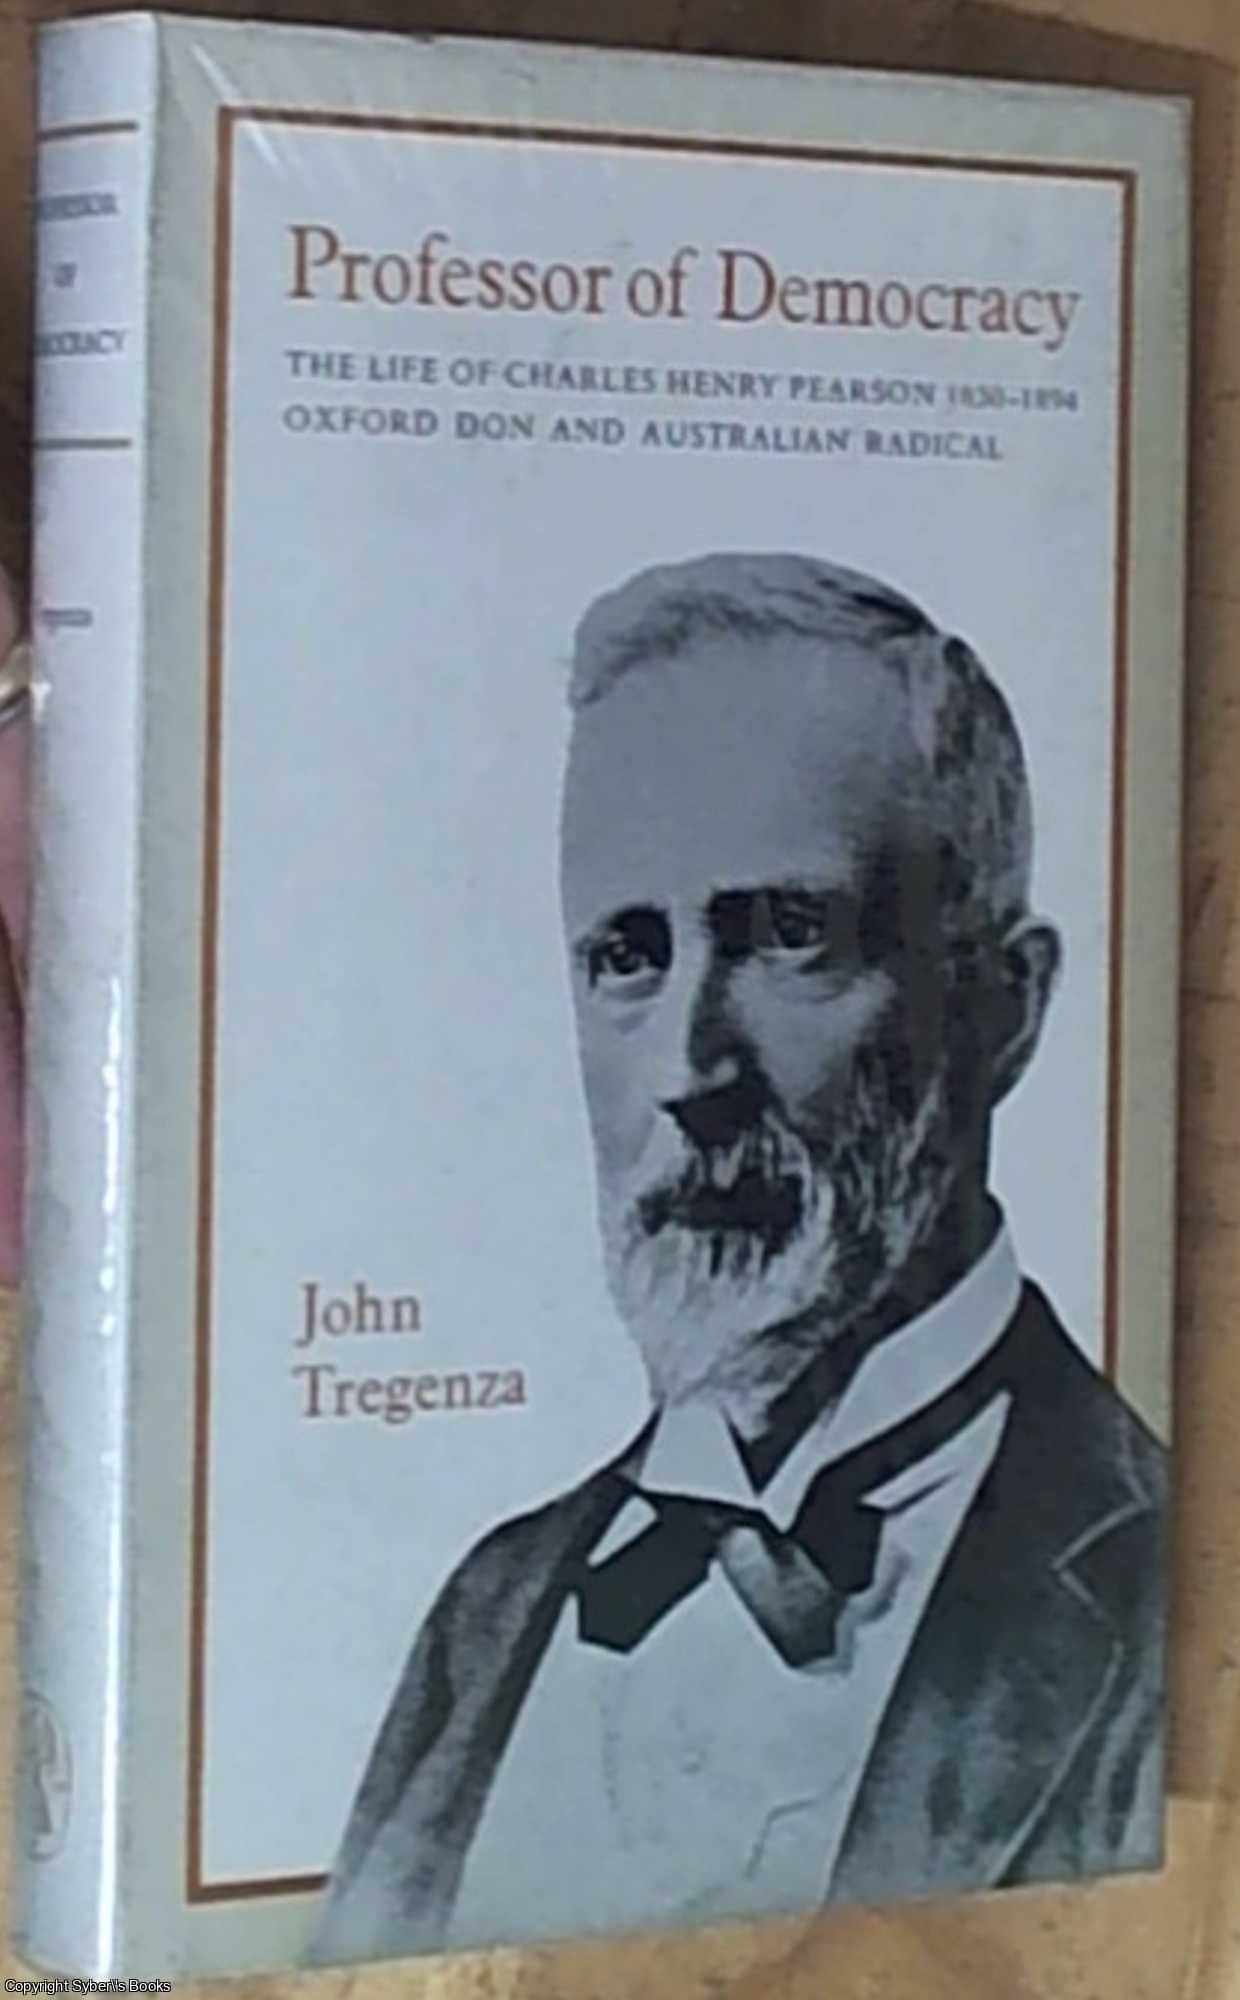 Tregenza, John - Professor of Democracy; The Life of Charles Henry Pearson 1830 -- 1894 Oxford Don and Australian Radical